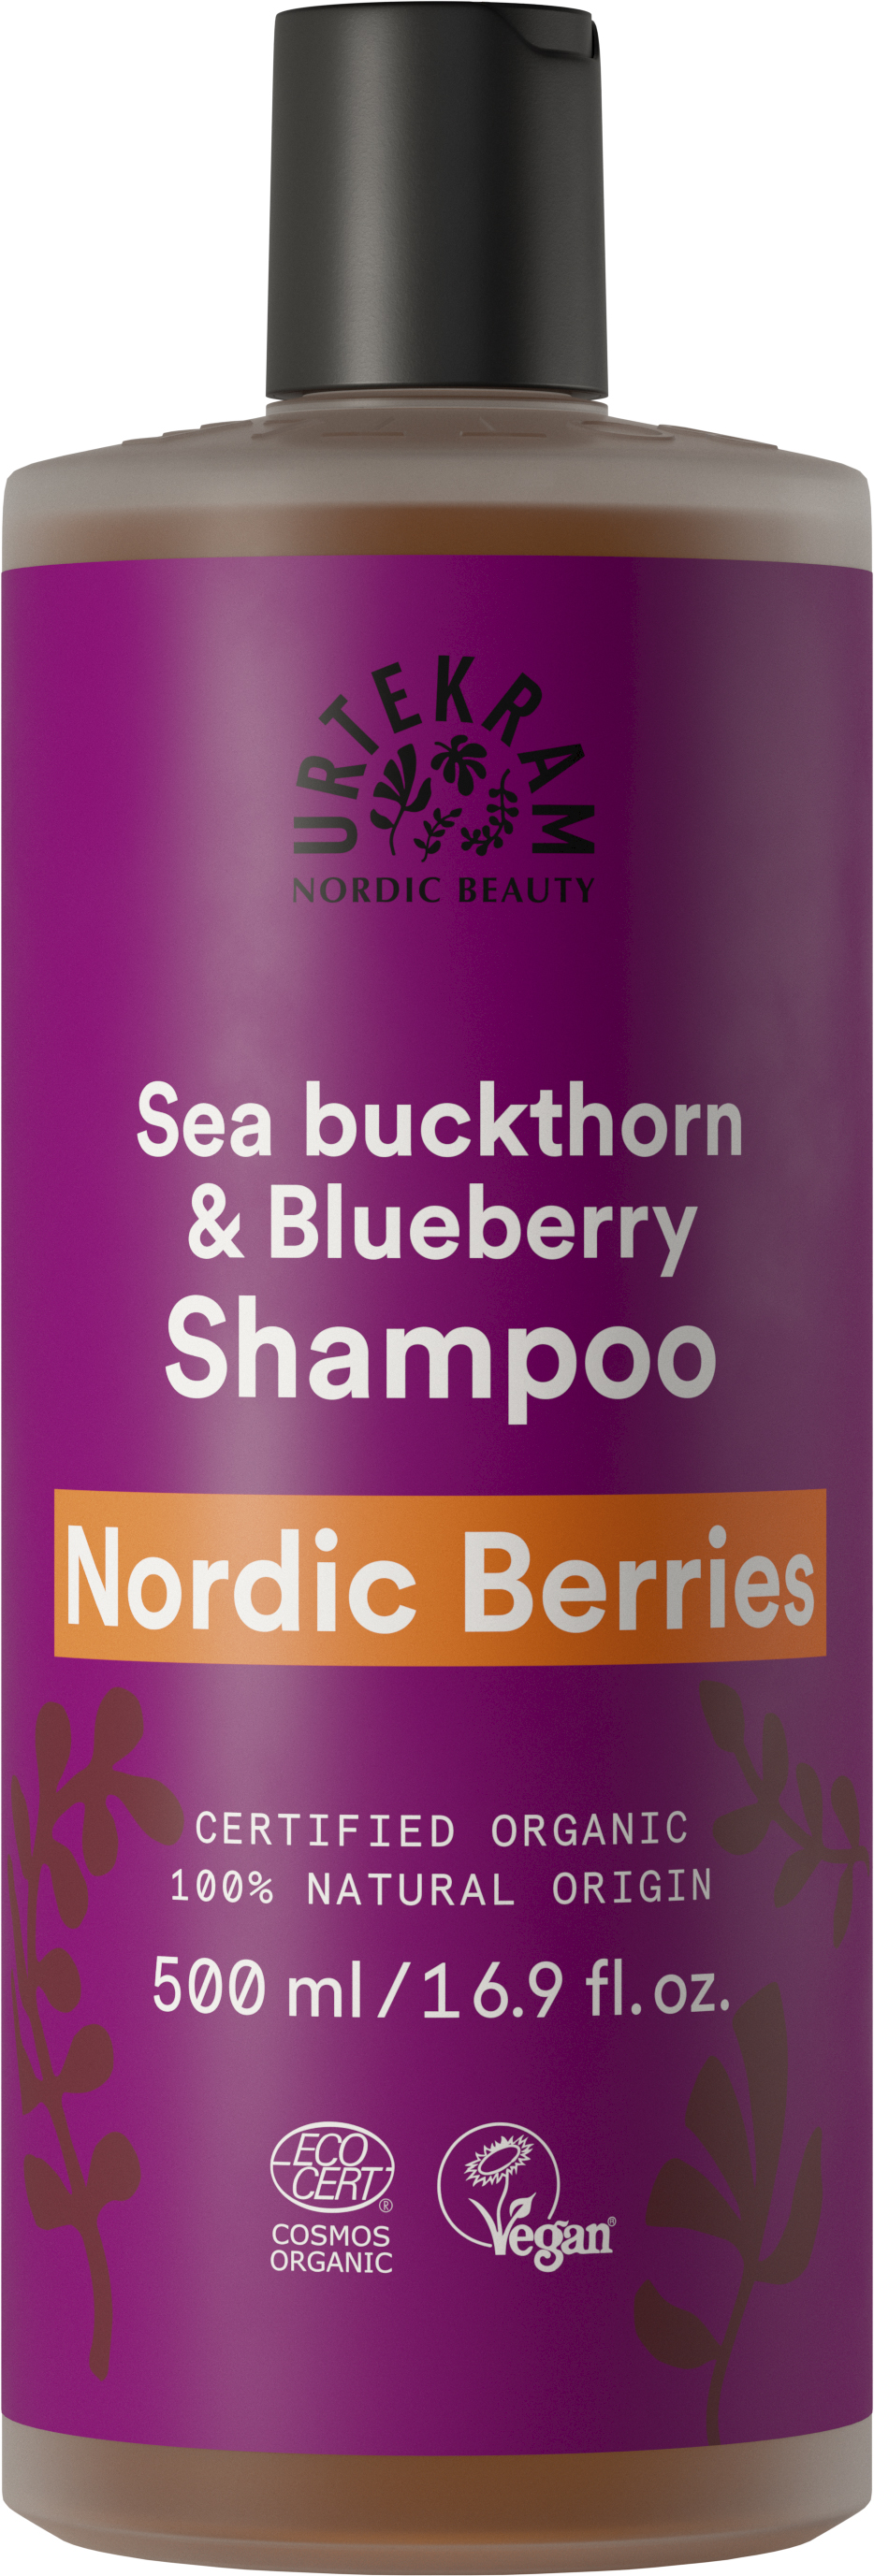 Nordic Berries Shampoo Repairing 500 ml - Urtekram